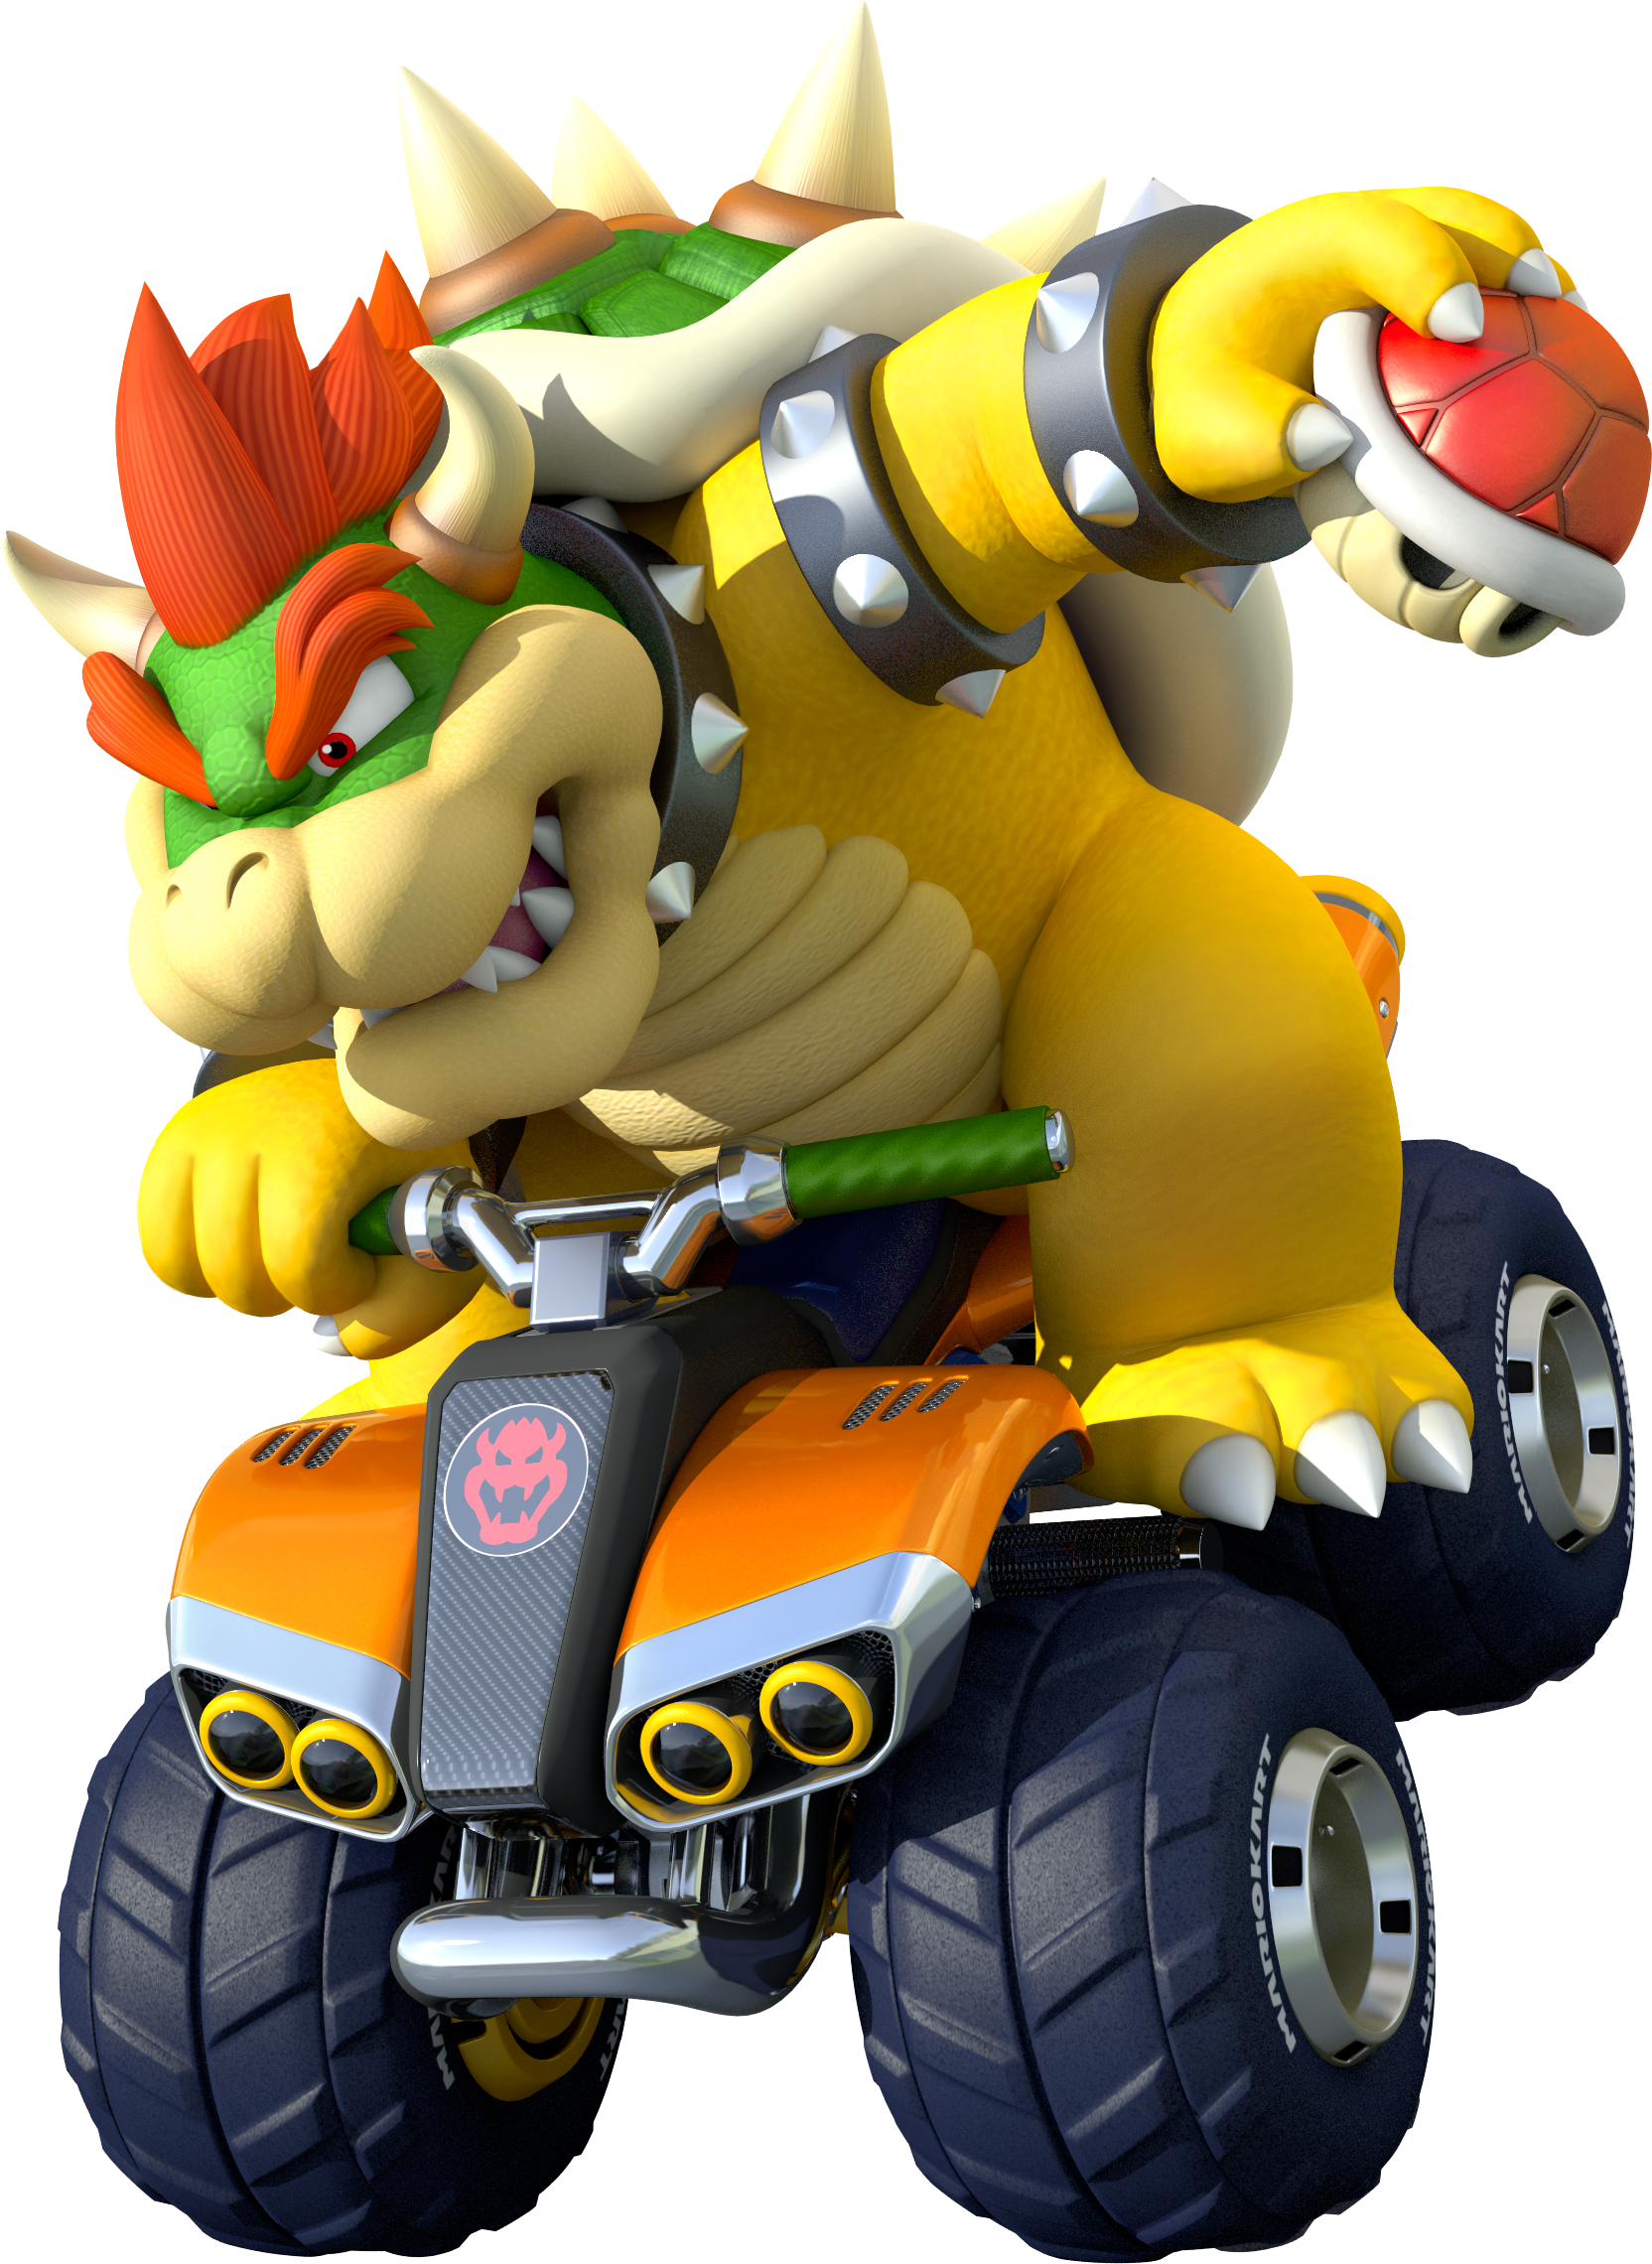 Hori Mario Kart 8 Deluxe Racing Wheel - Mario